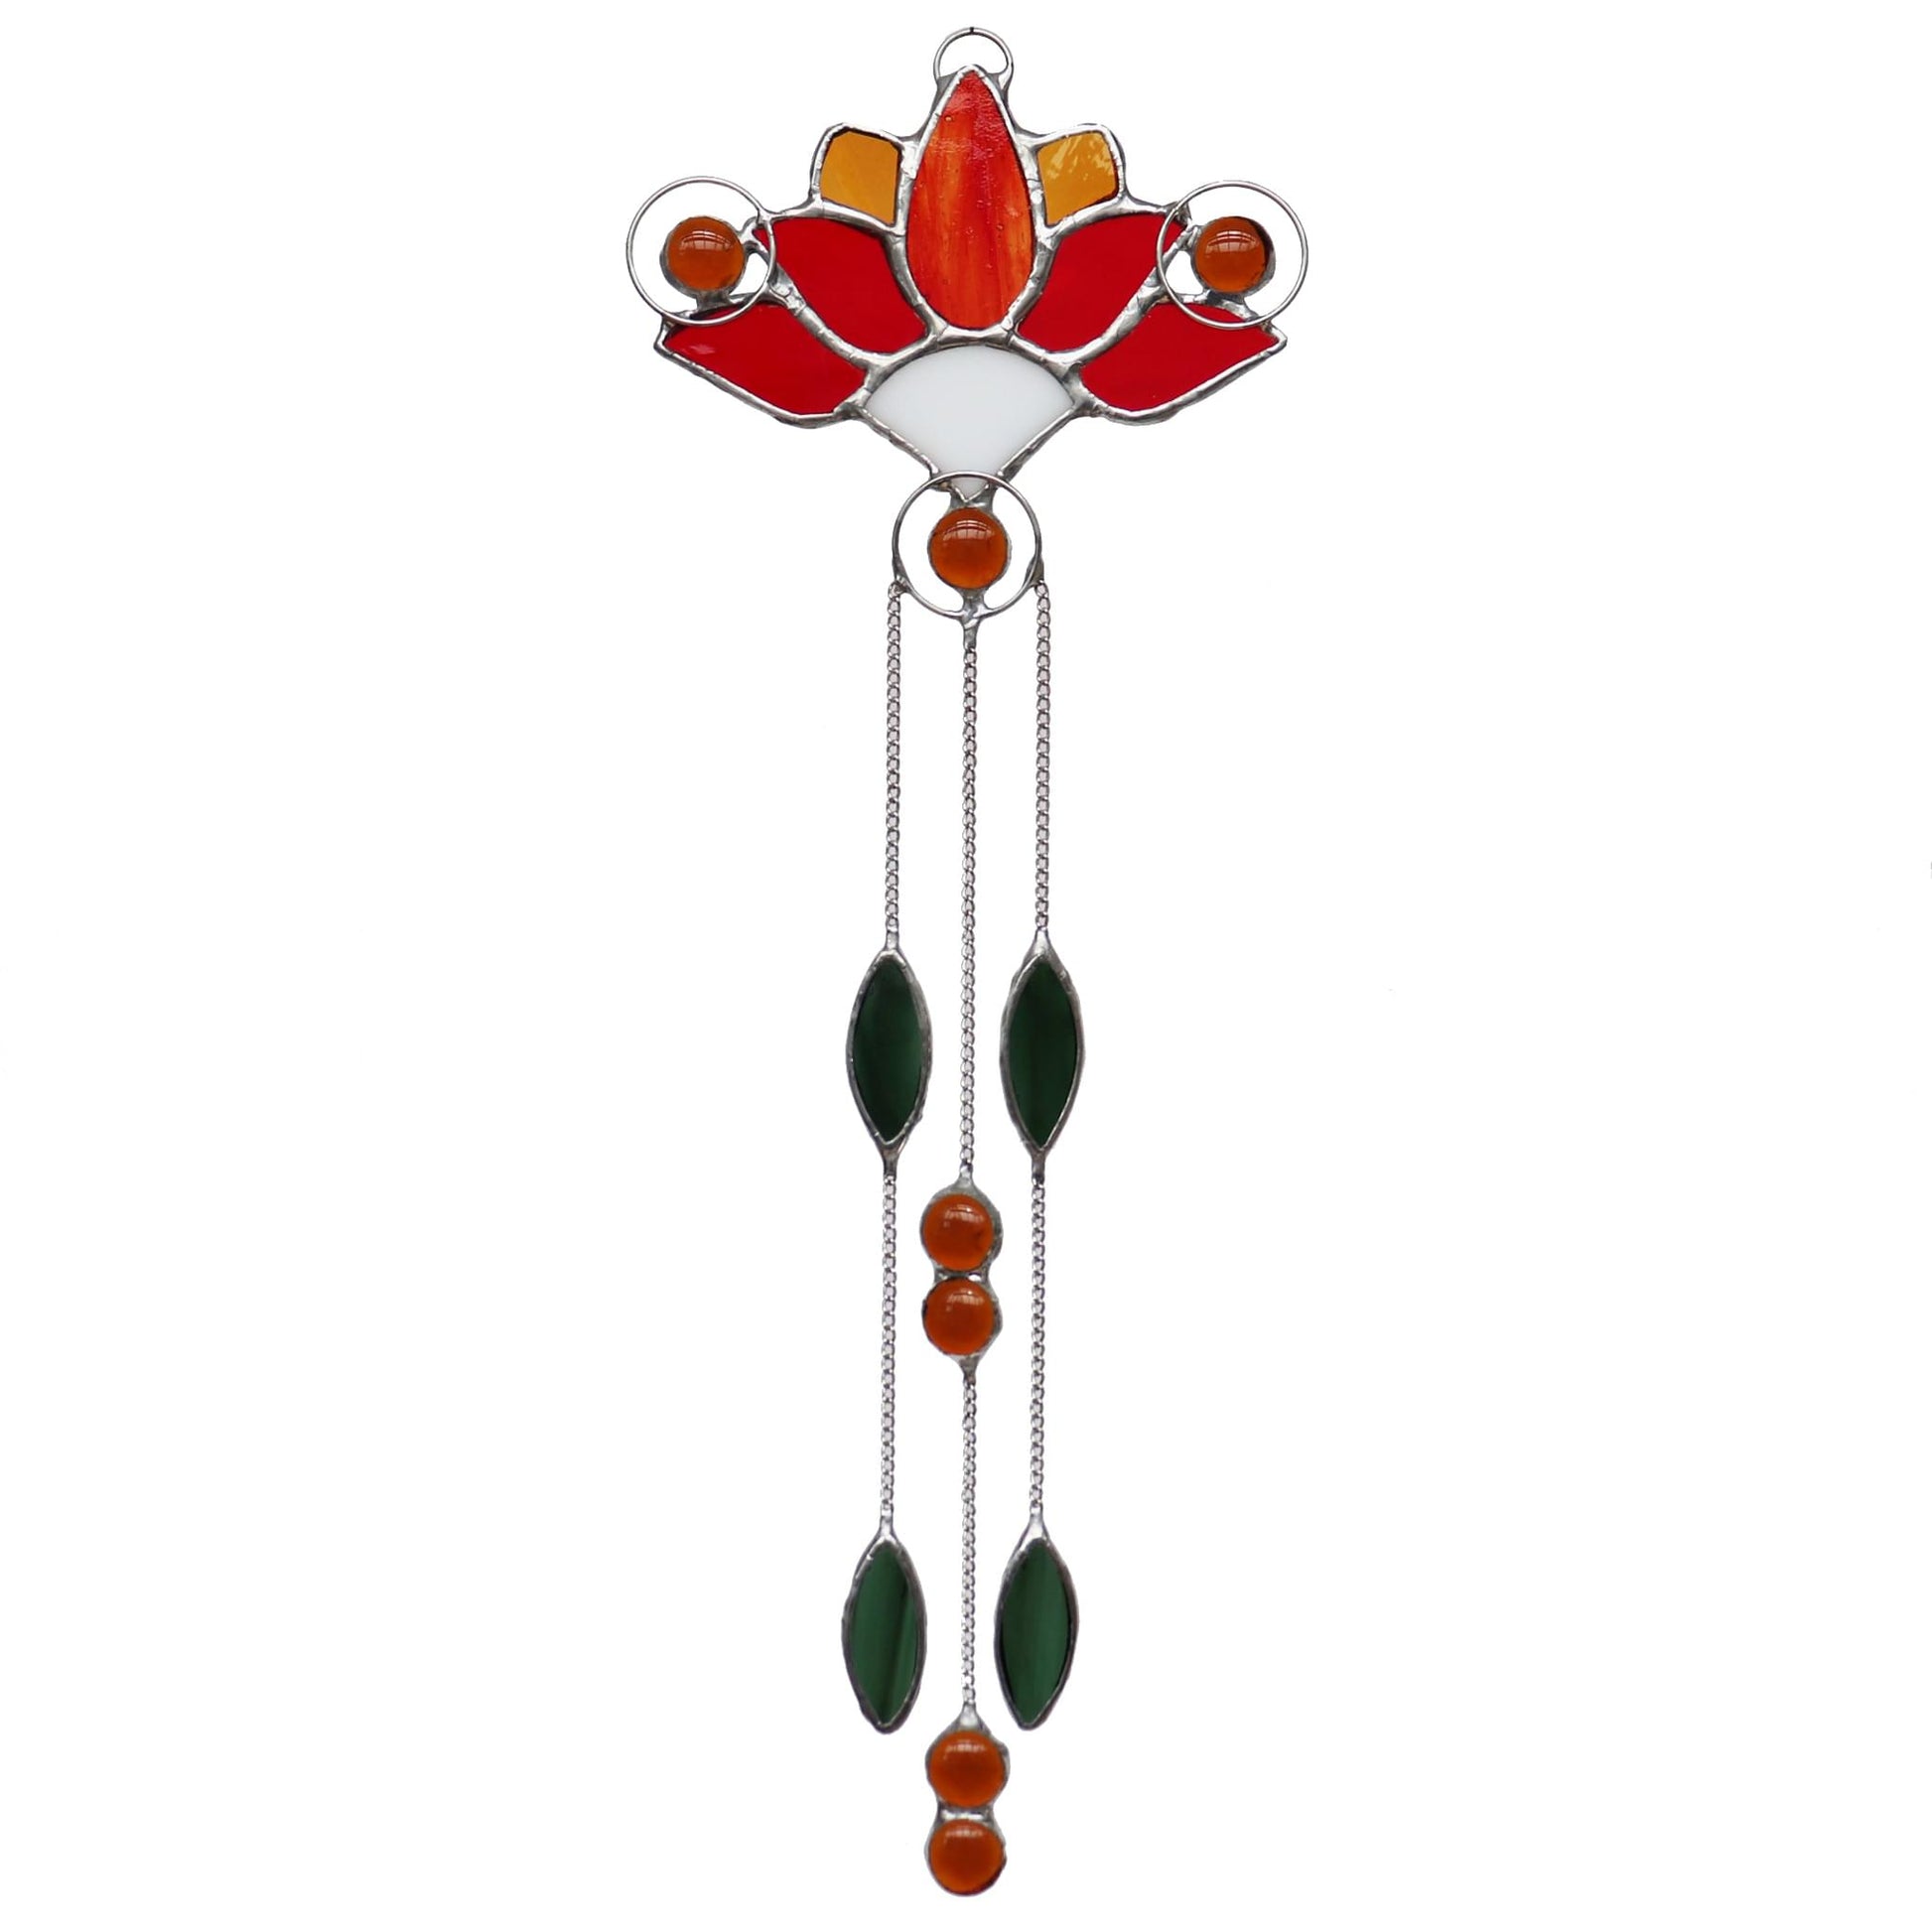 Stained Glass Suncatcher Red Lotus Flower Design 2